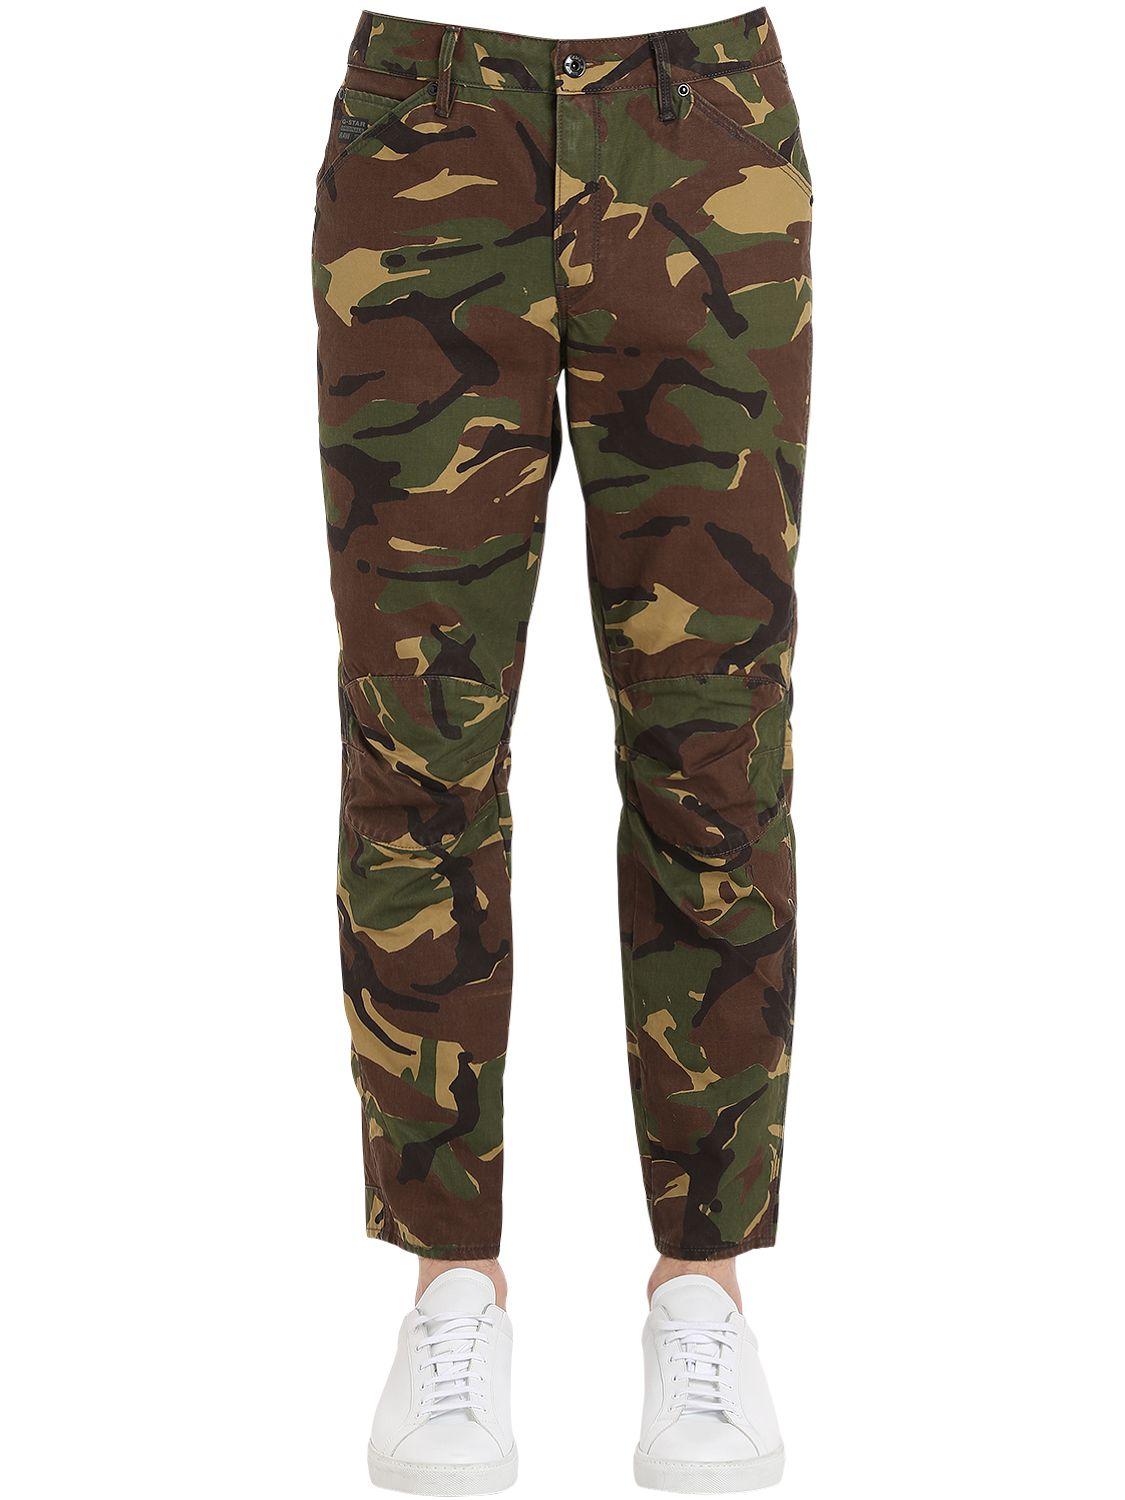 G-Star RAW Denim 5622 Elwood Woodland Camouflage Jeans in Army Camo ...